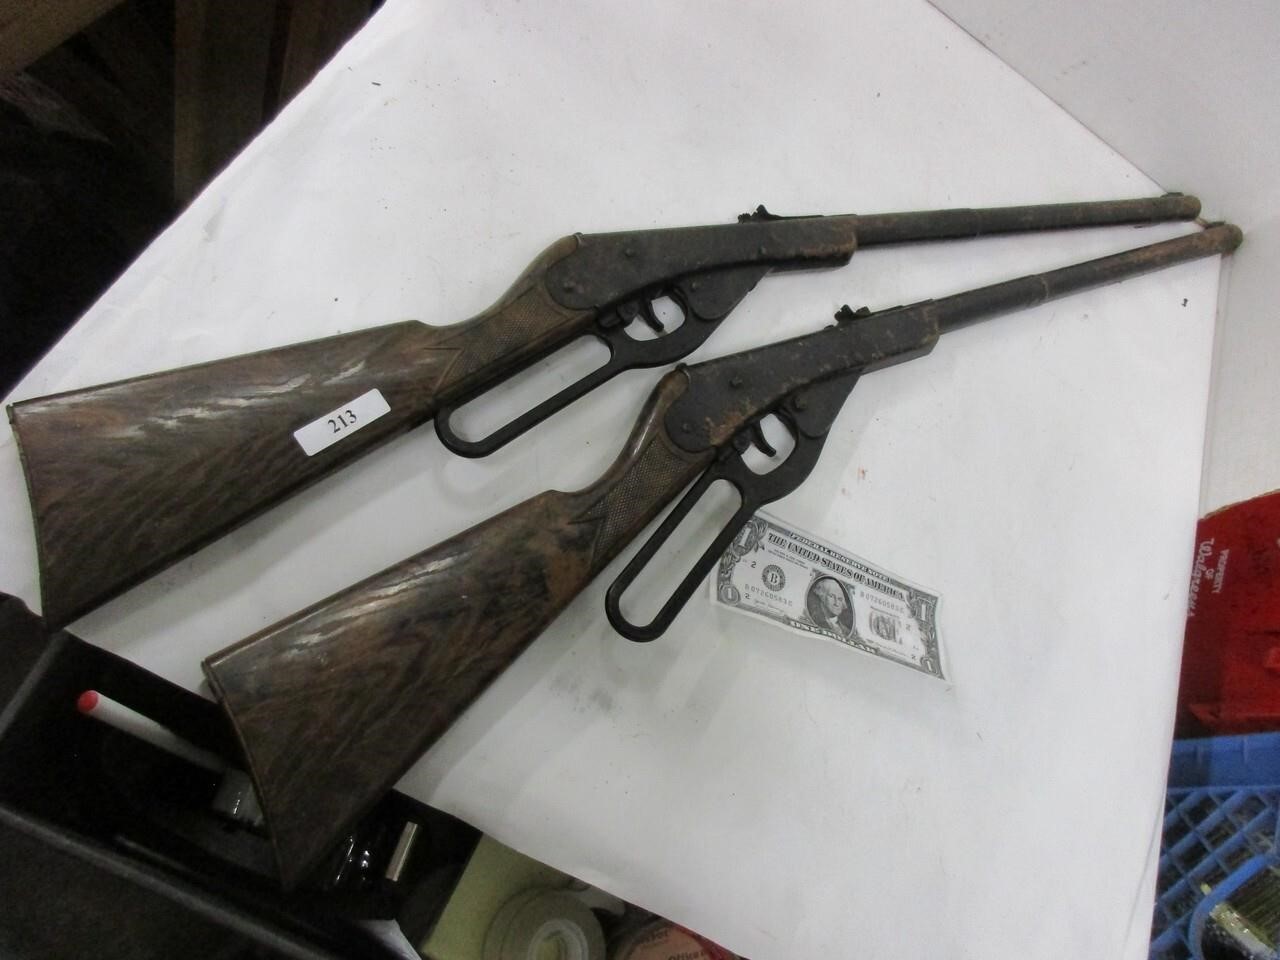 Two vintage daisy BB guns